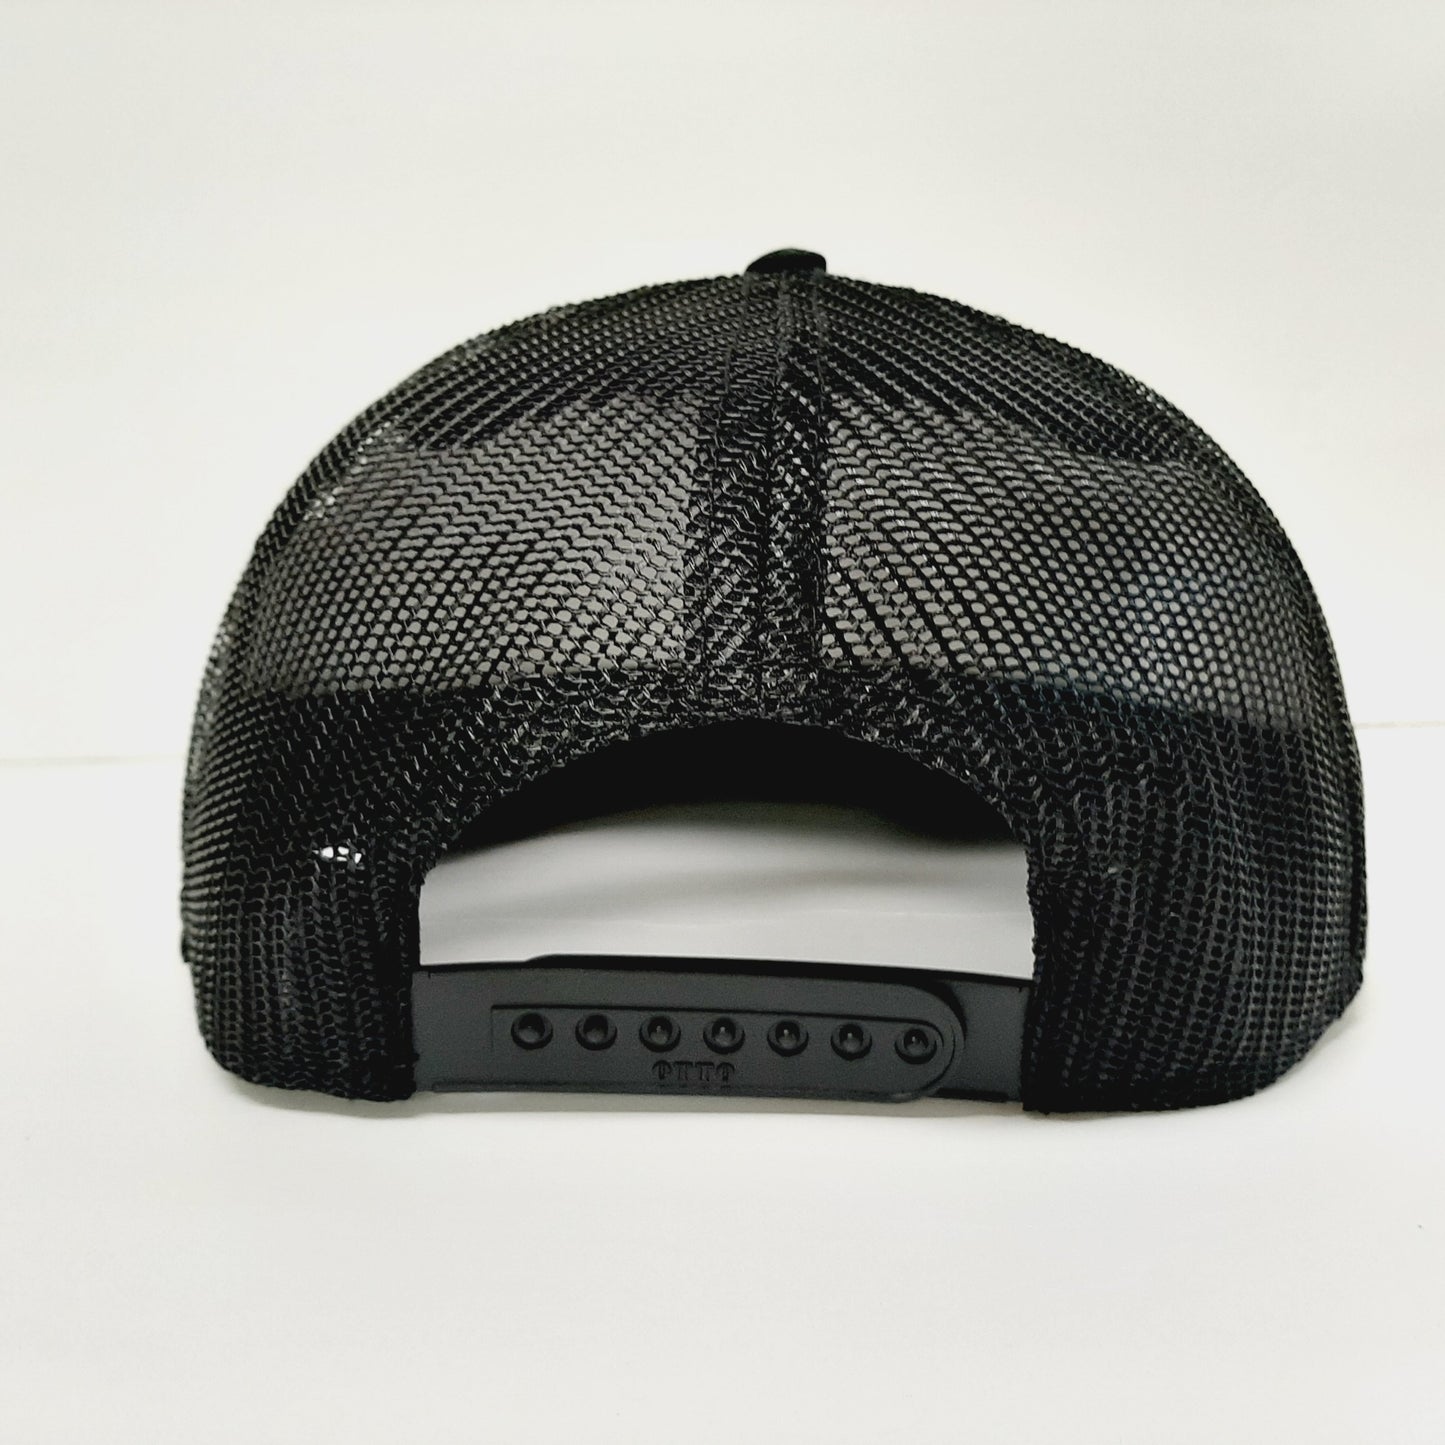 GMC Trucks Embroidered Patch Flat Bill Snapback Mesh Hat Cap OTTO Solid Black